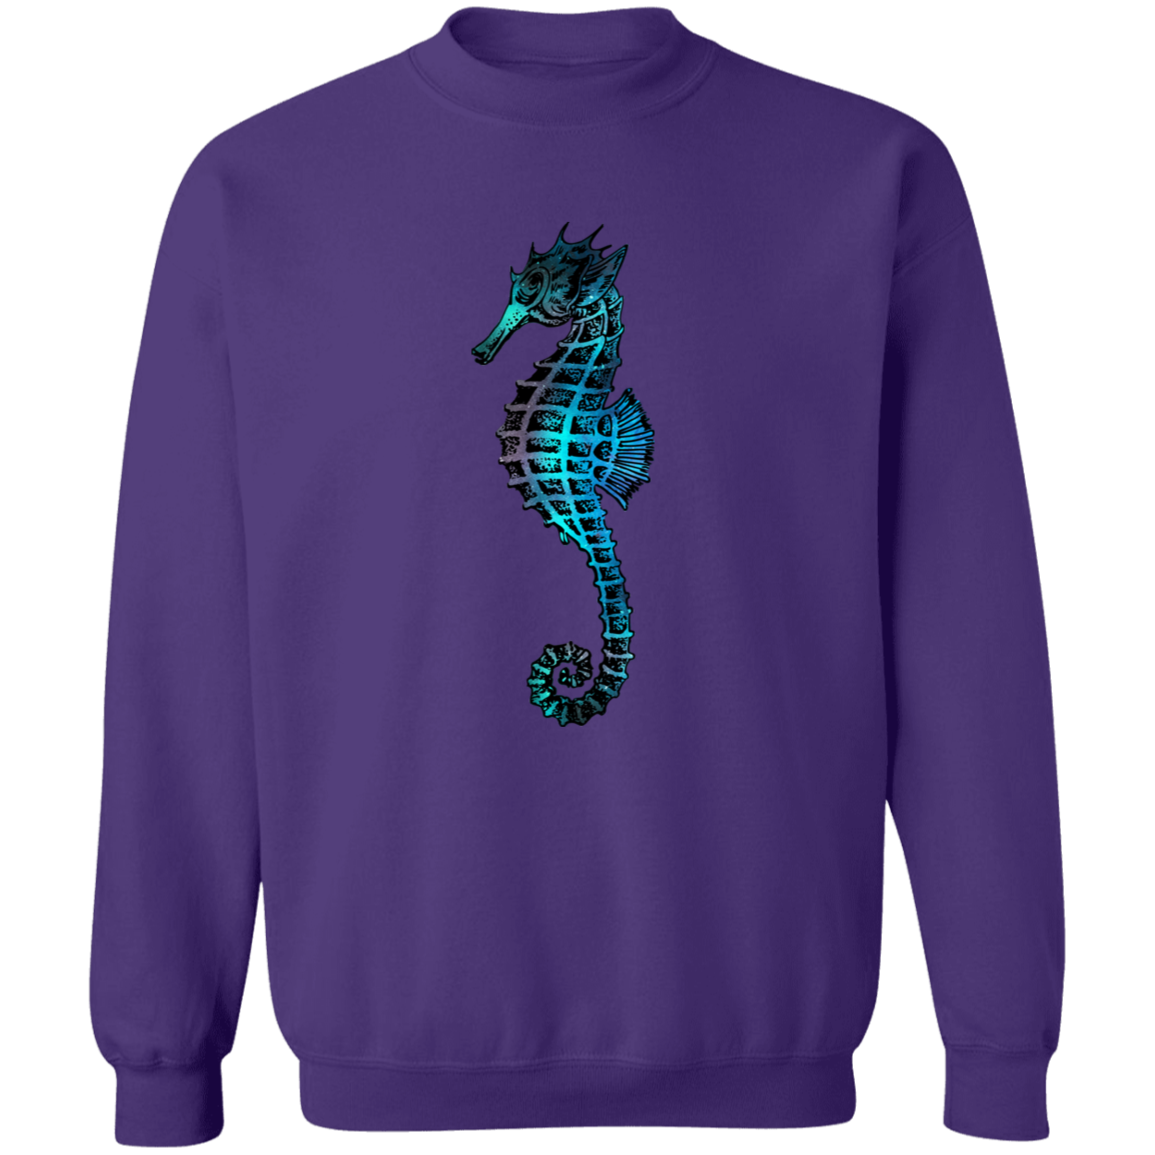 Colorful Seahorse - T-shirts, Hoodies and Sweatshirts